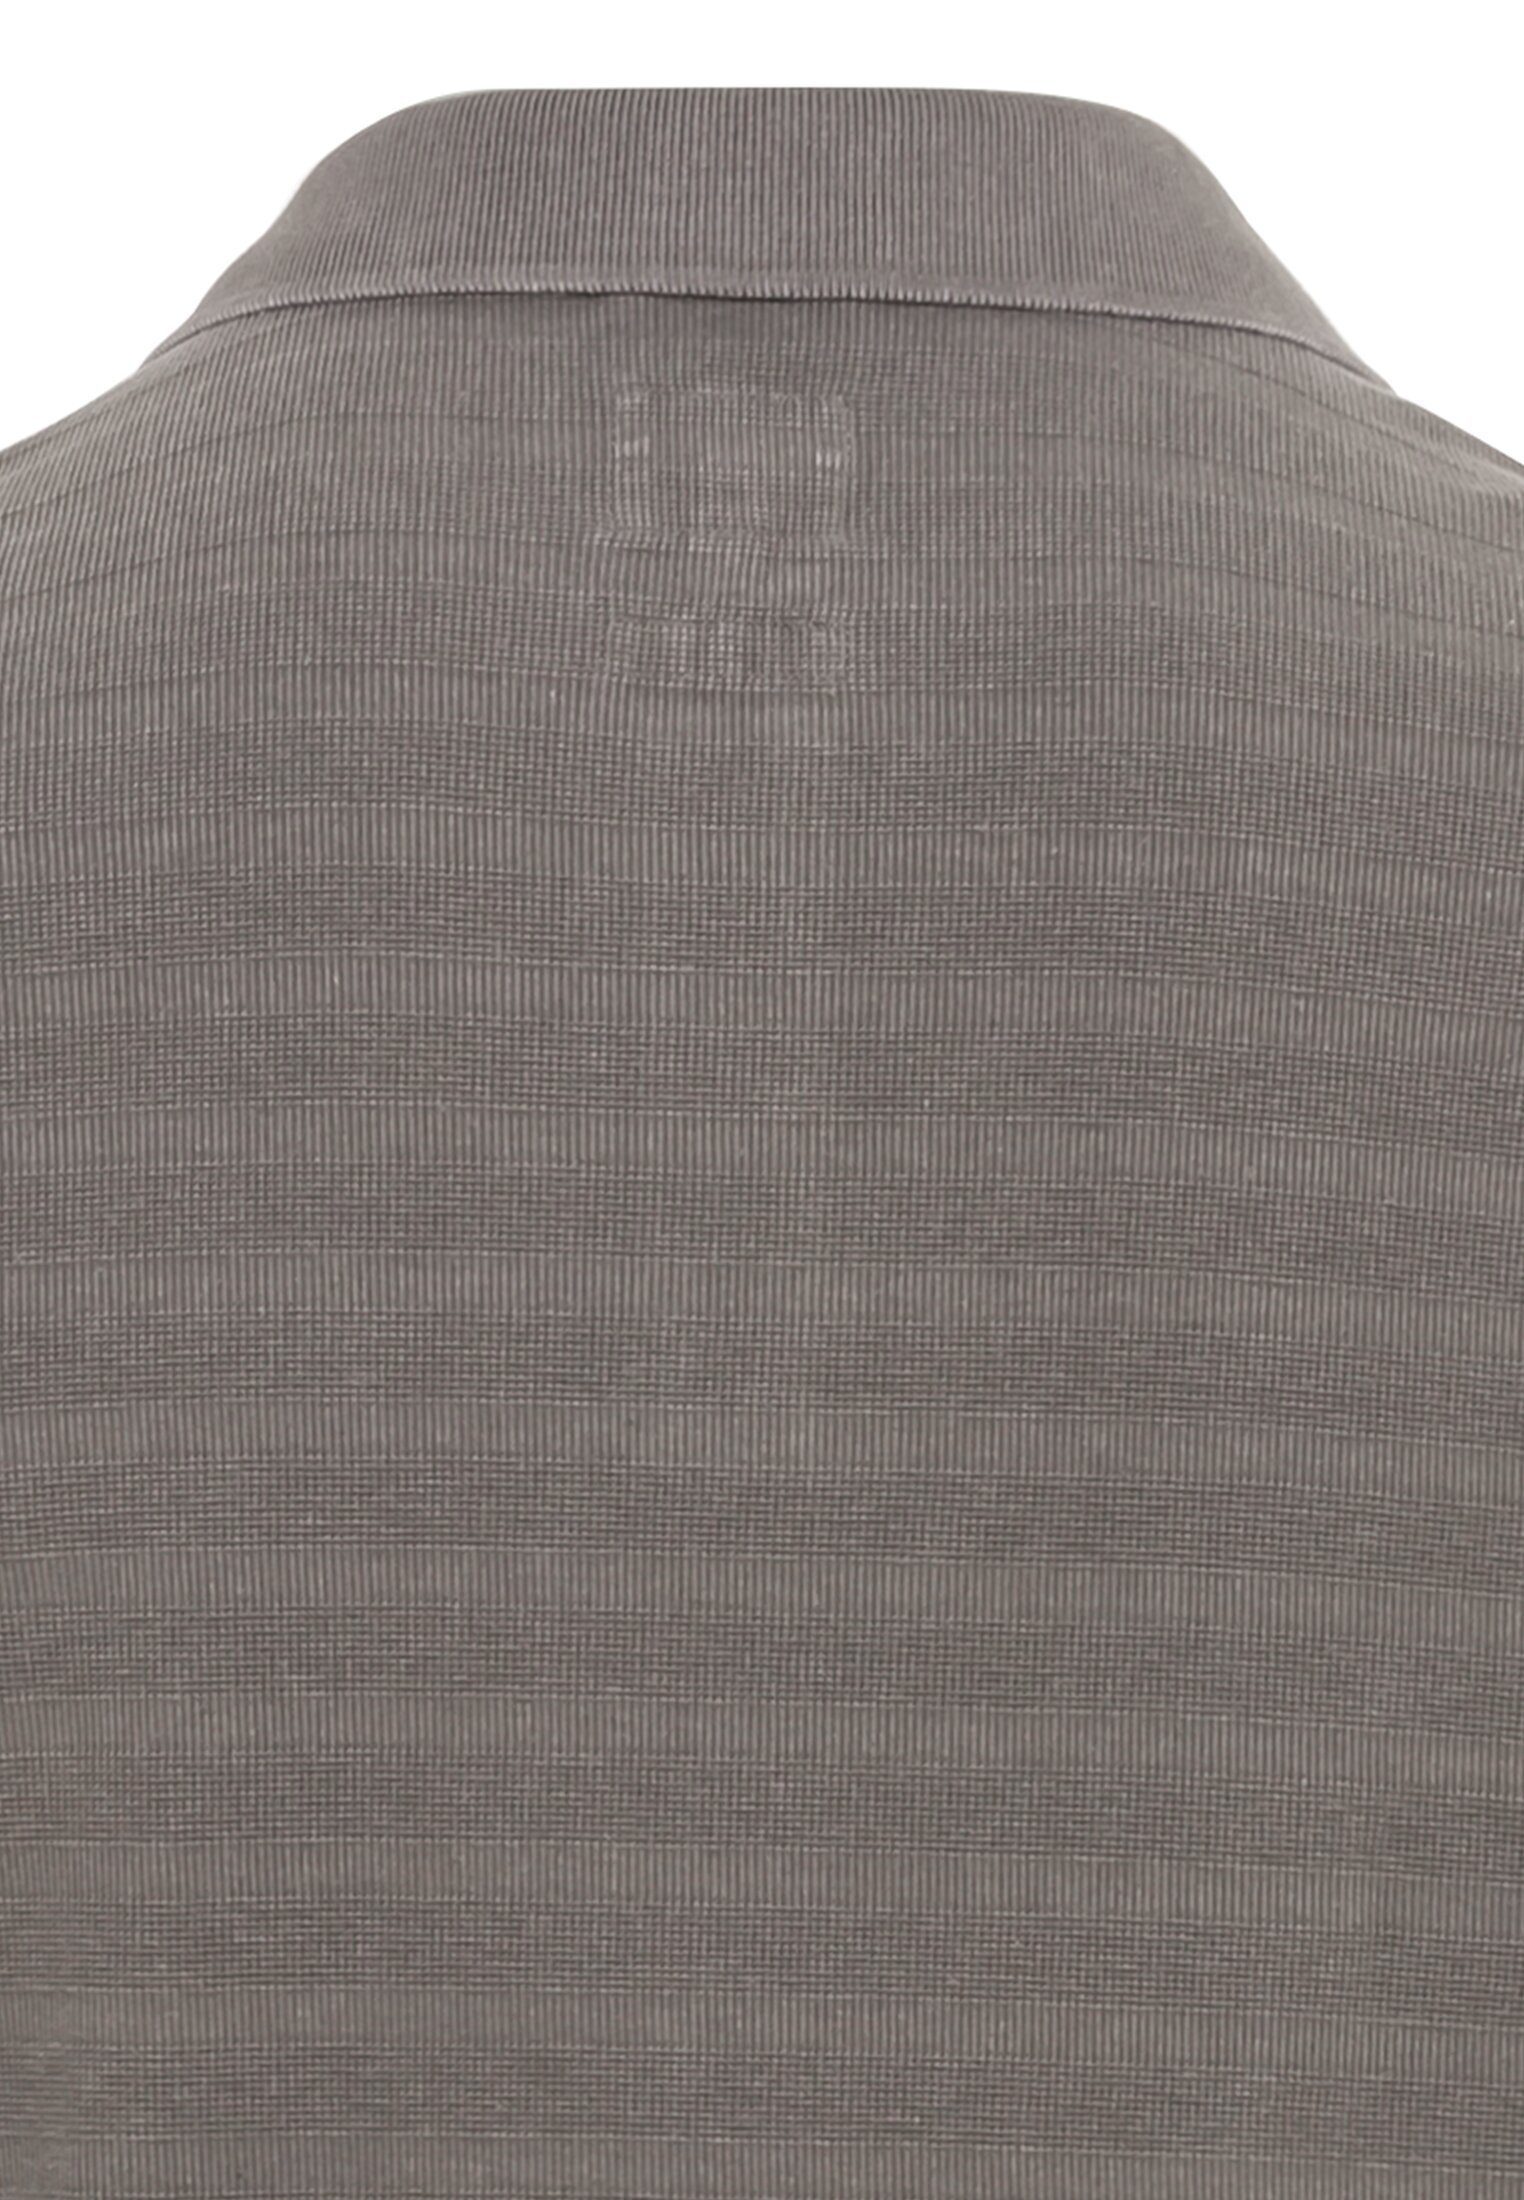 camel active tonalen Streifenmuster im Poloshirt Grau Shirts_Poloshirt